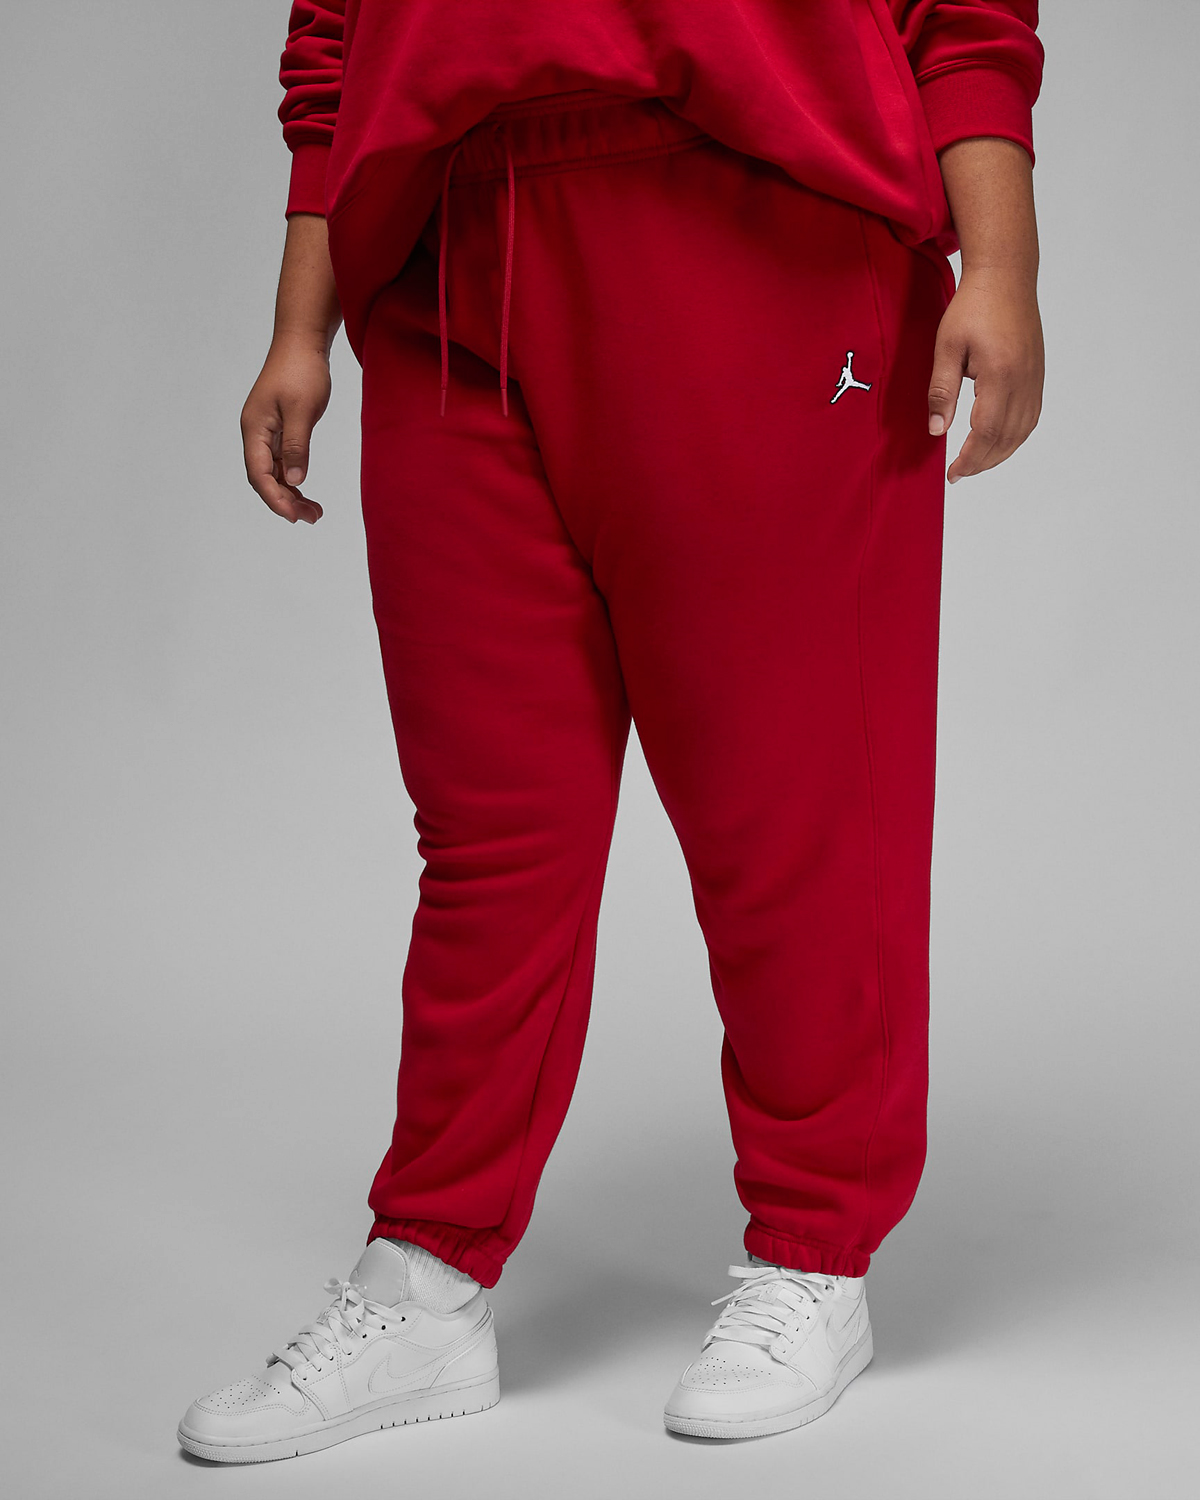 Jordan-Womens-Brooklyn-Fleece-Pants-Plus-Size-Gym-Red